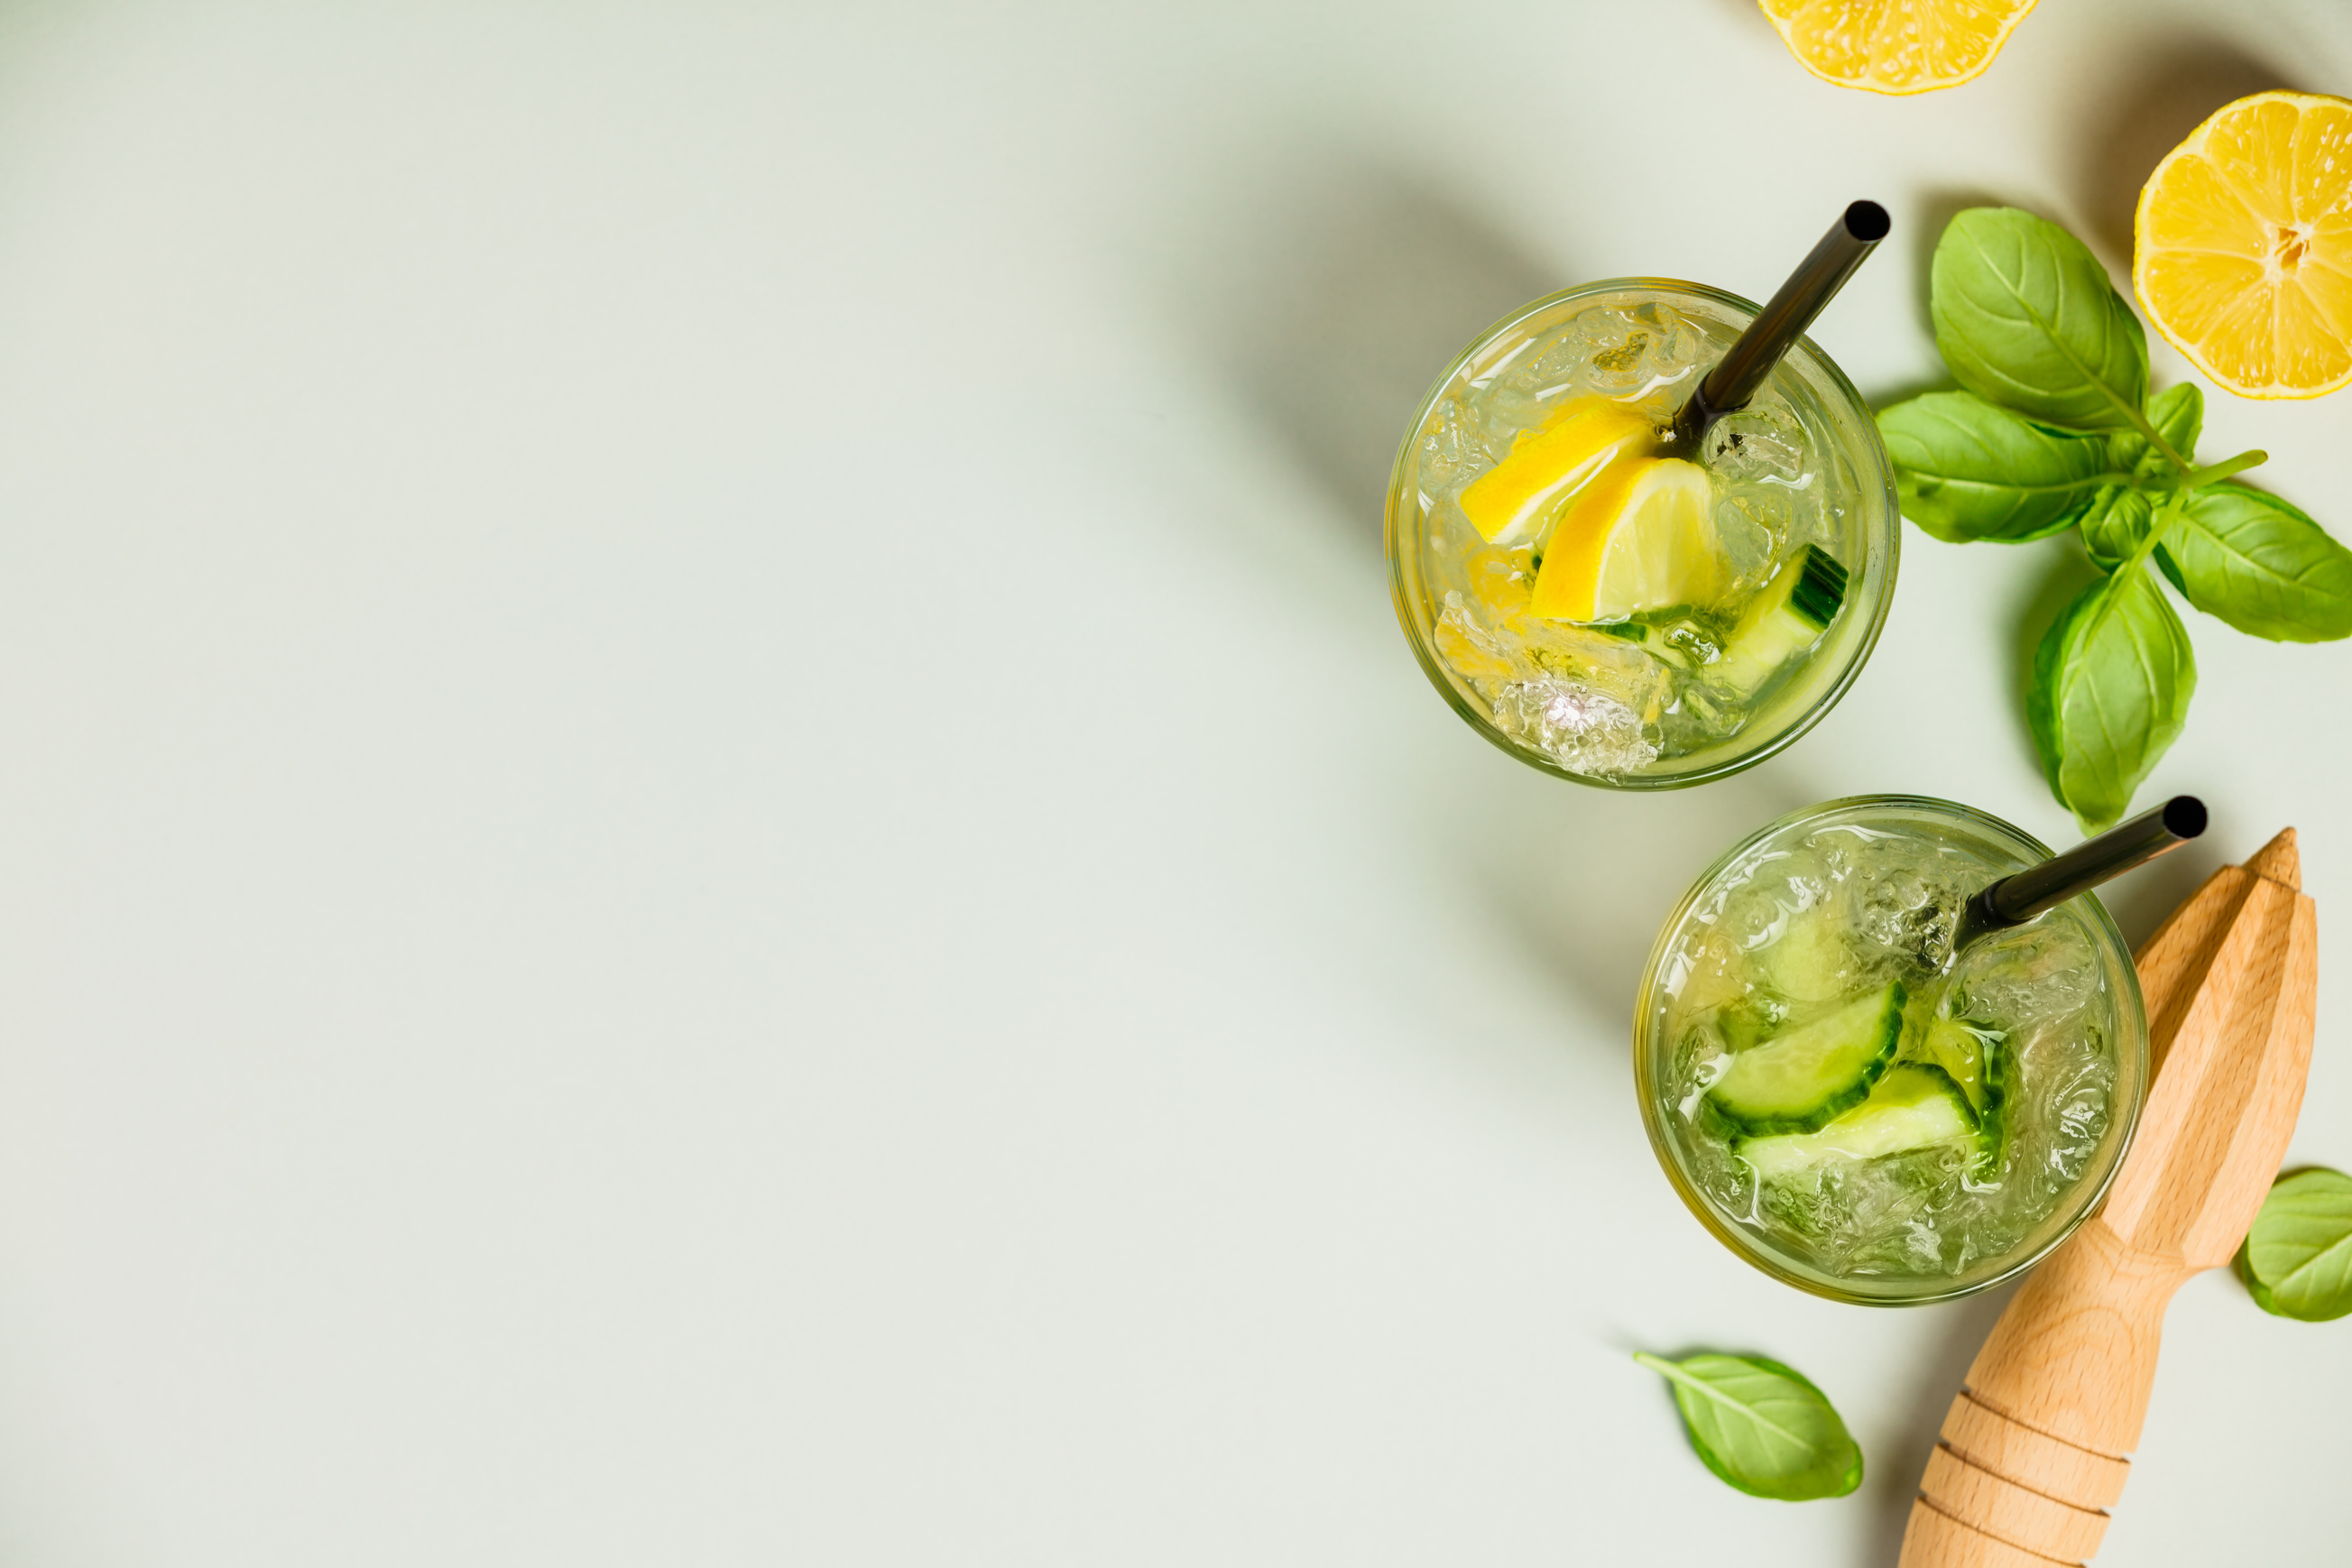 Healthy Homemade Lemonade or Cocktail